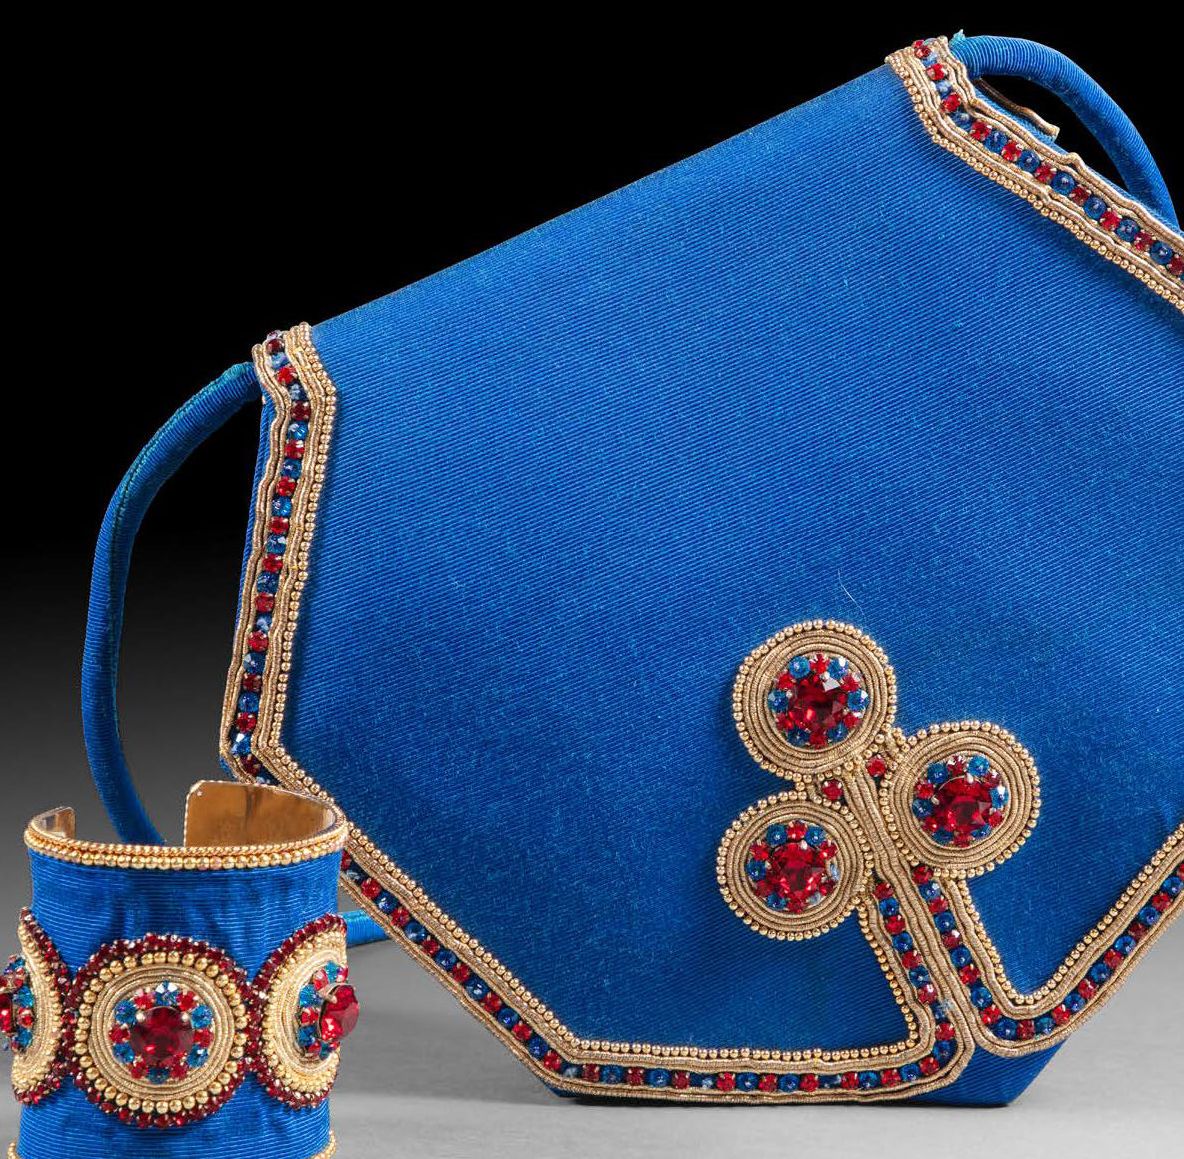 LESAGE Paris 绣有珍珠及仿蓝宝石和红宝石的皇家蓝托曼斜挎包。肩带手柄 
约 1987/1992 年
H.25 厘米 - 28 厘米 
H.58（带手&hellip;